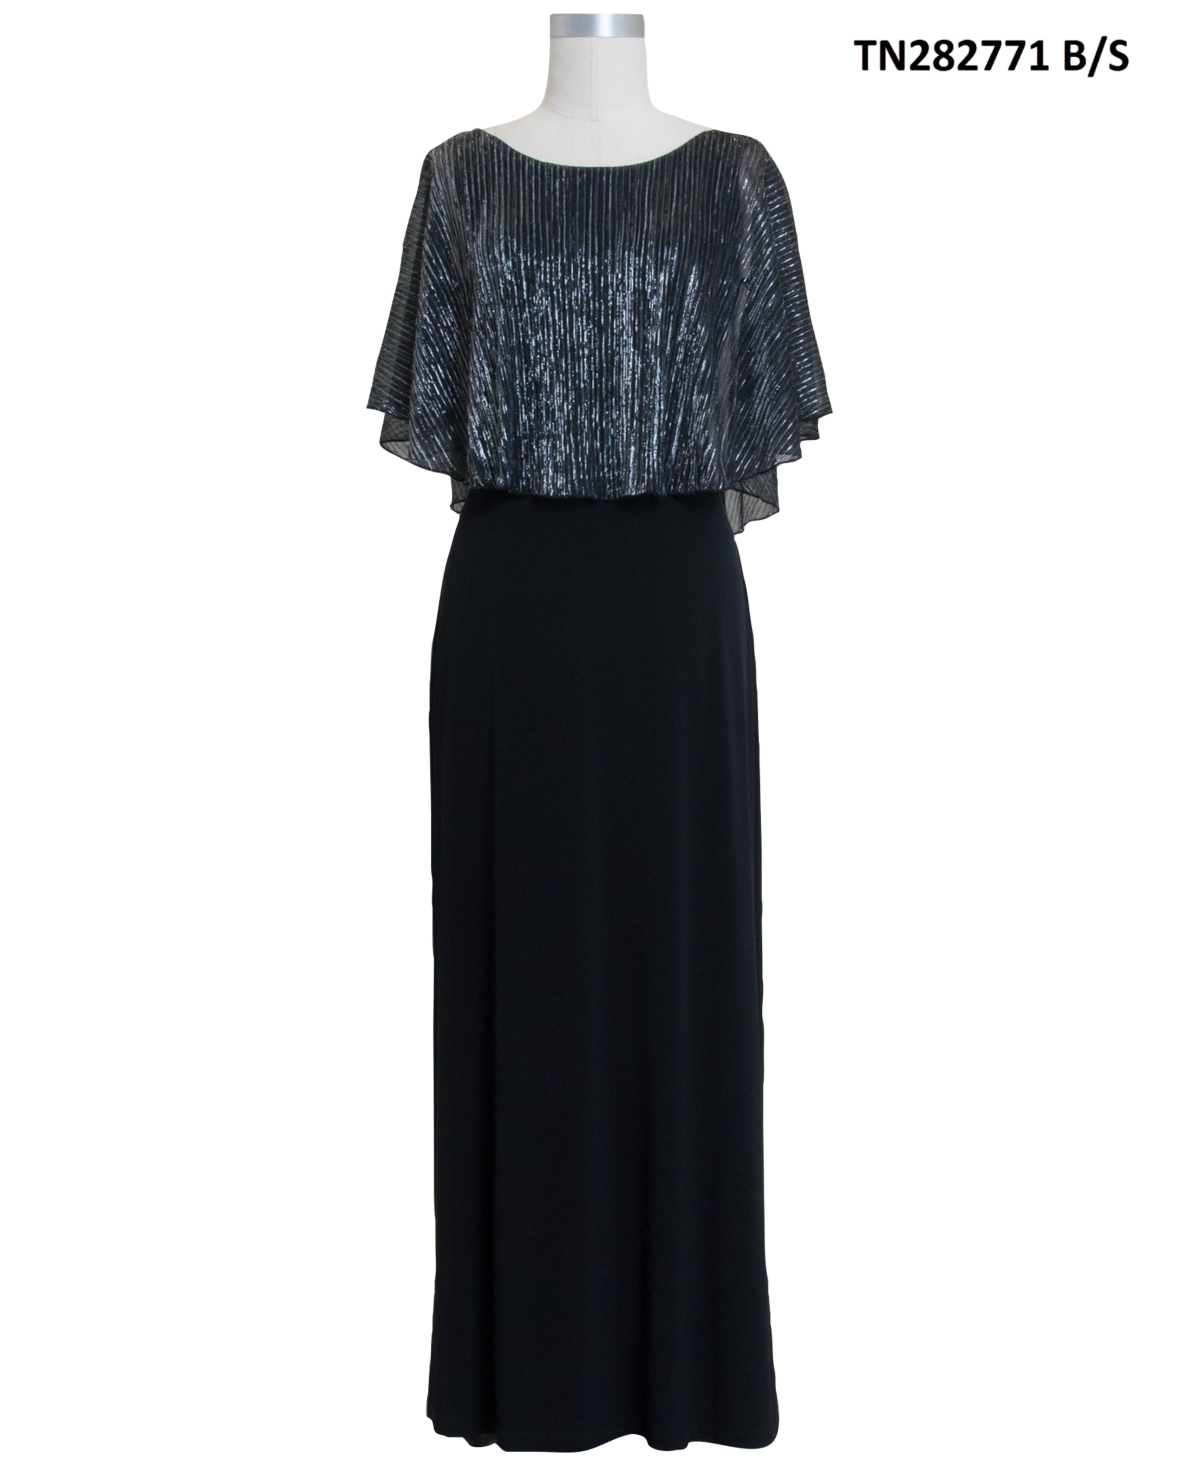 Plus Size Cape-Overlay Dress - Black/silv